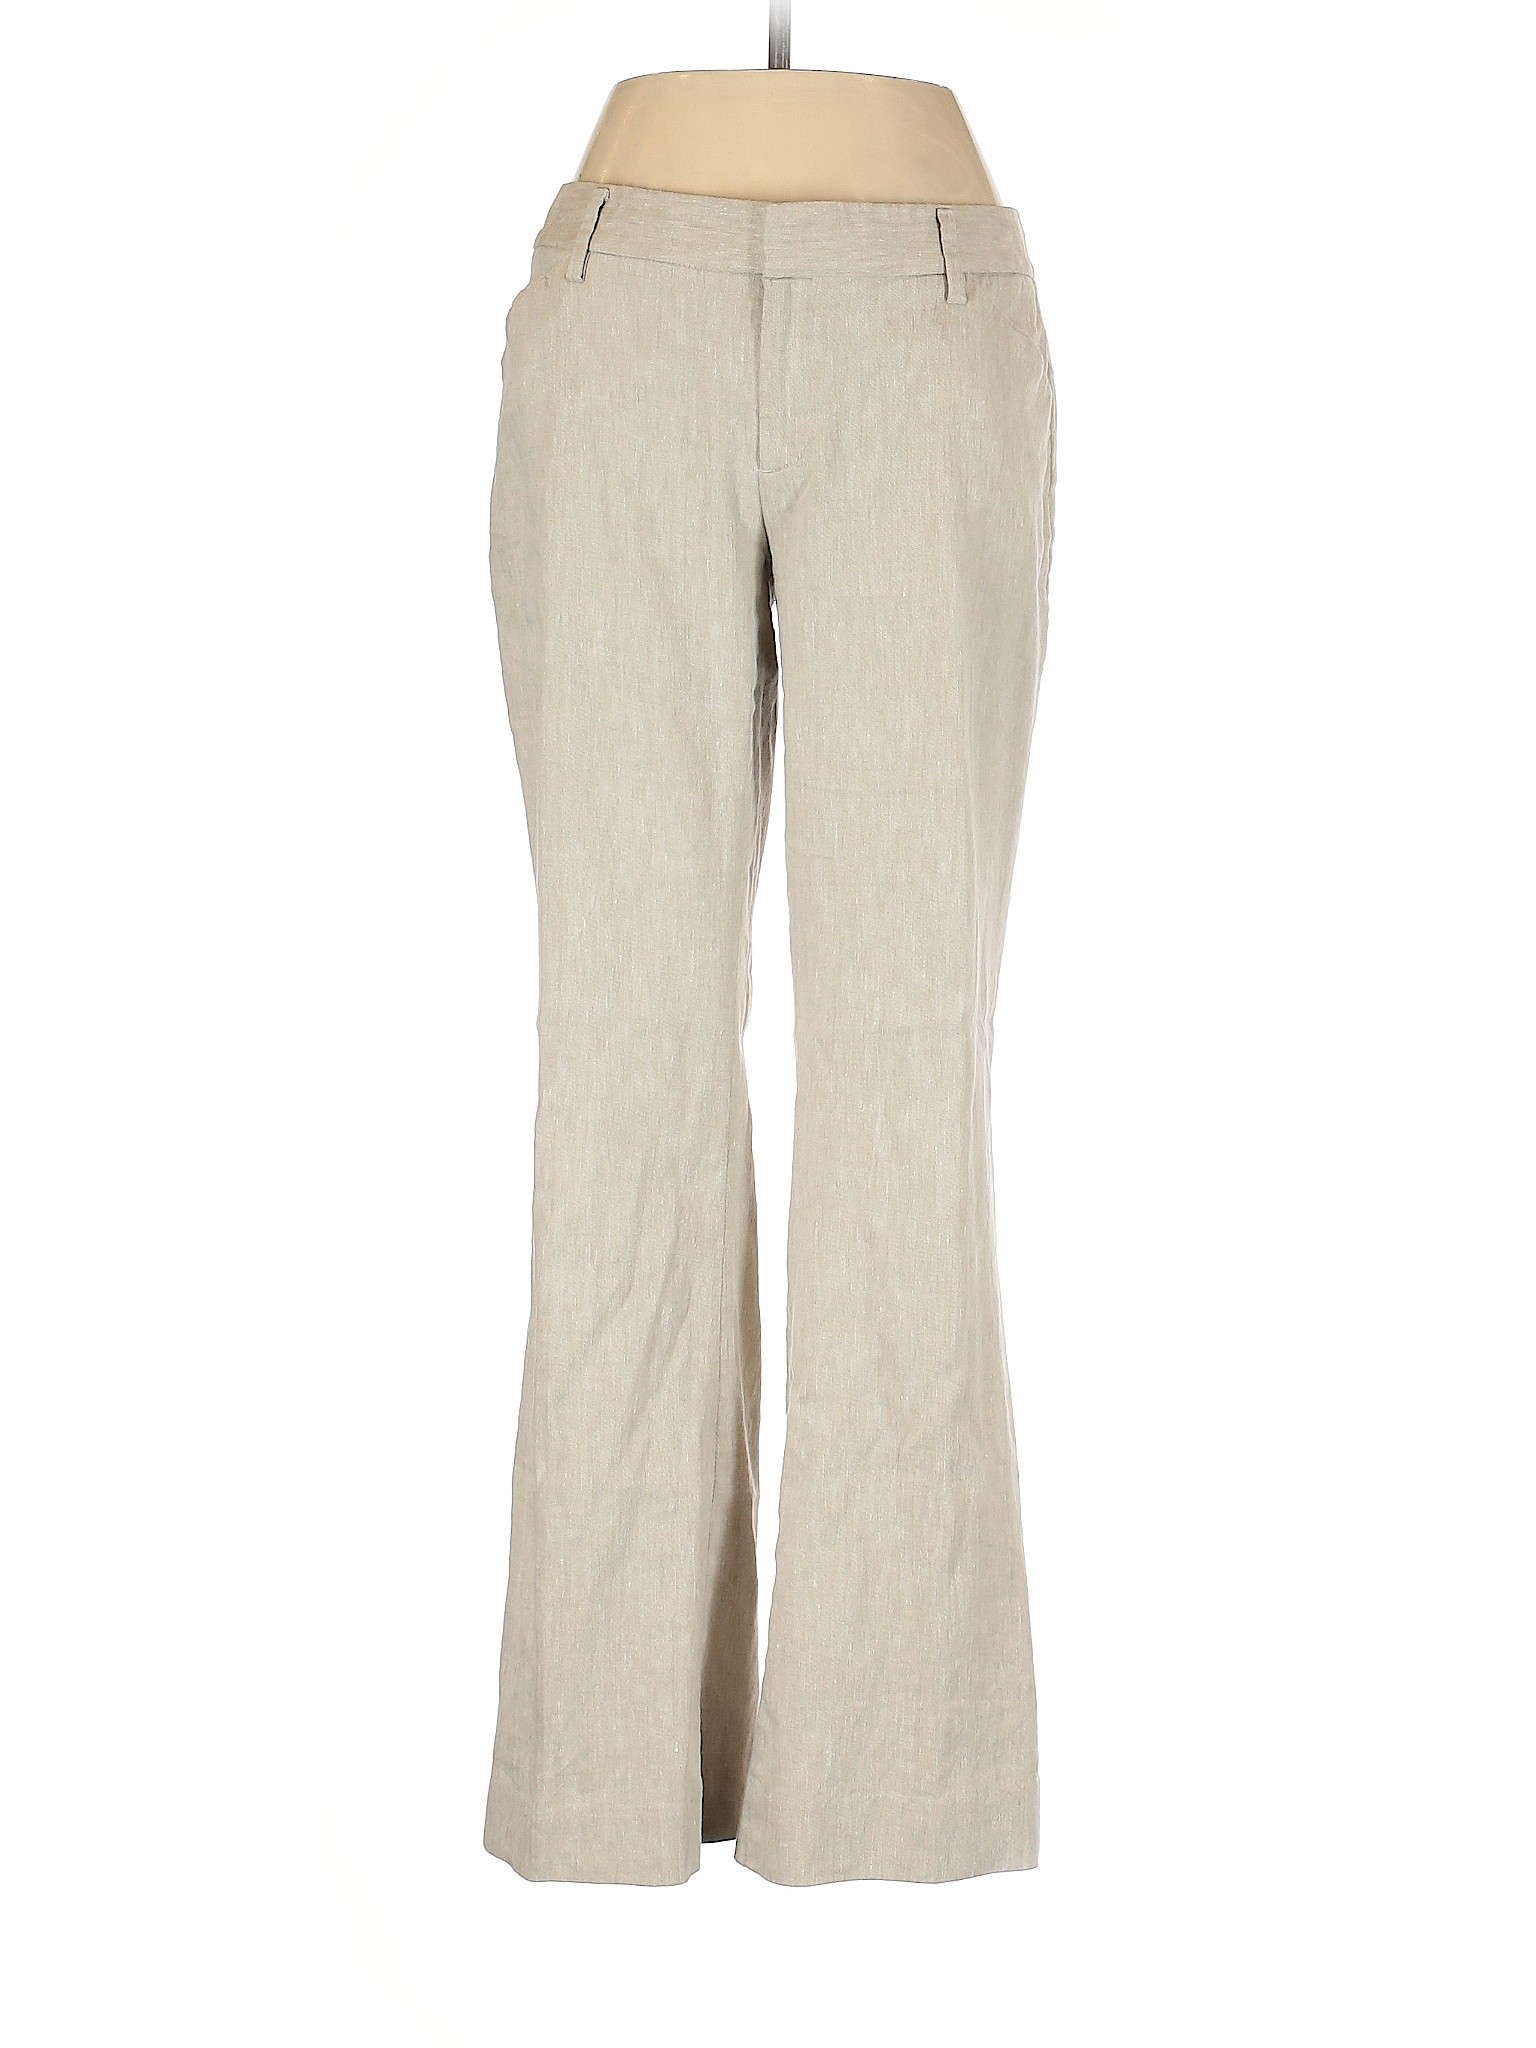 Gap Women Brown Linen Pants 2 | eBay